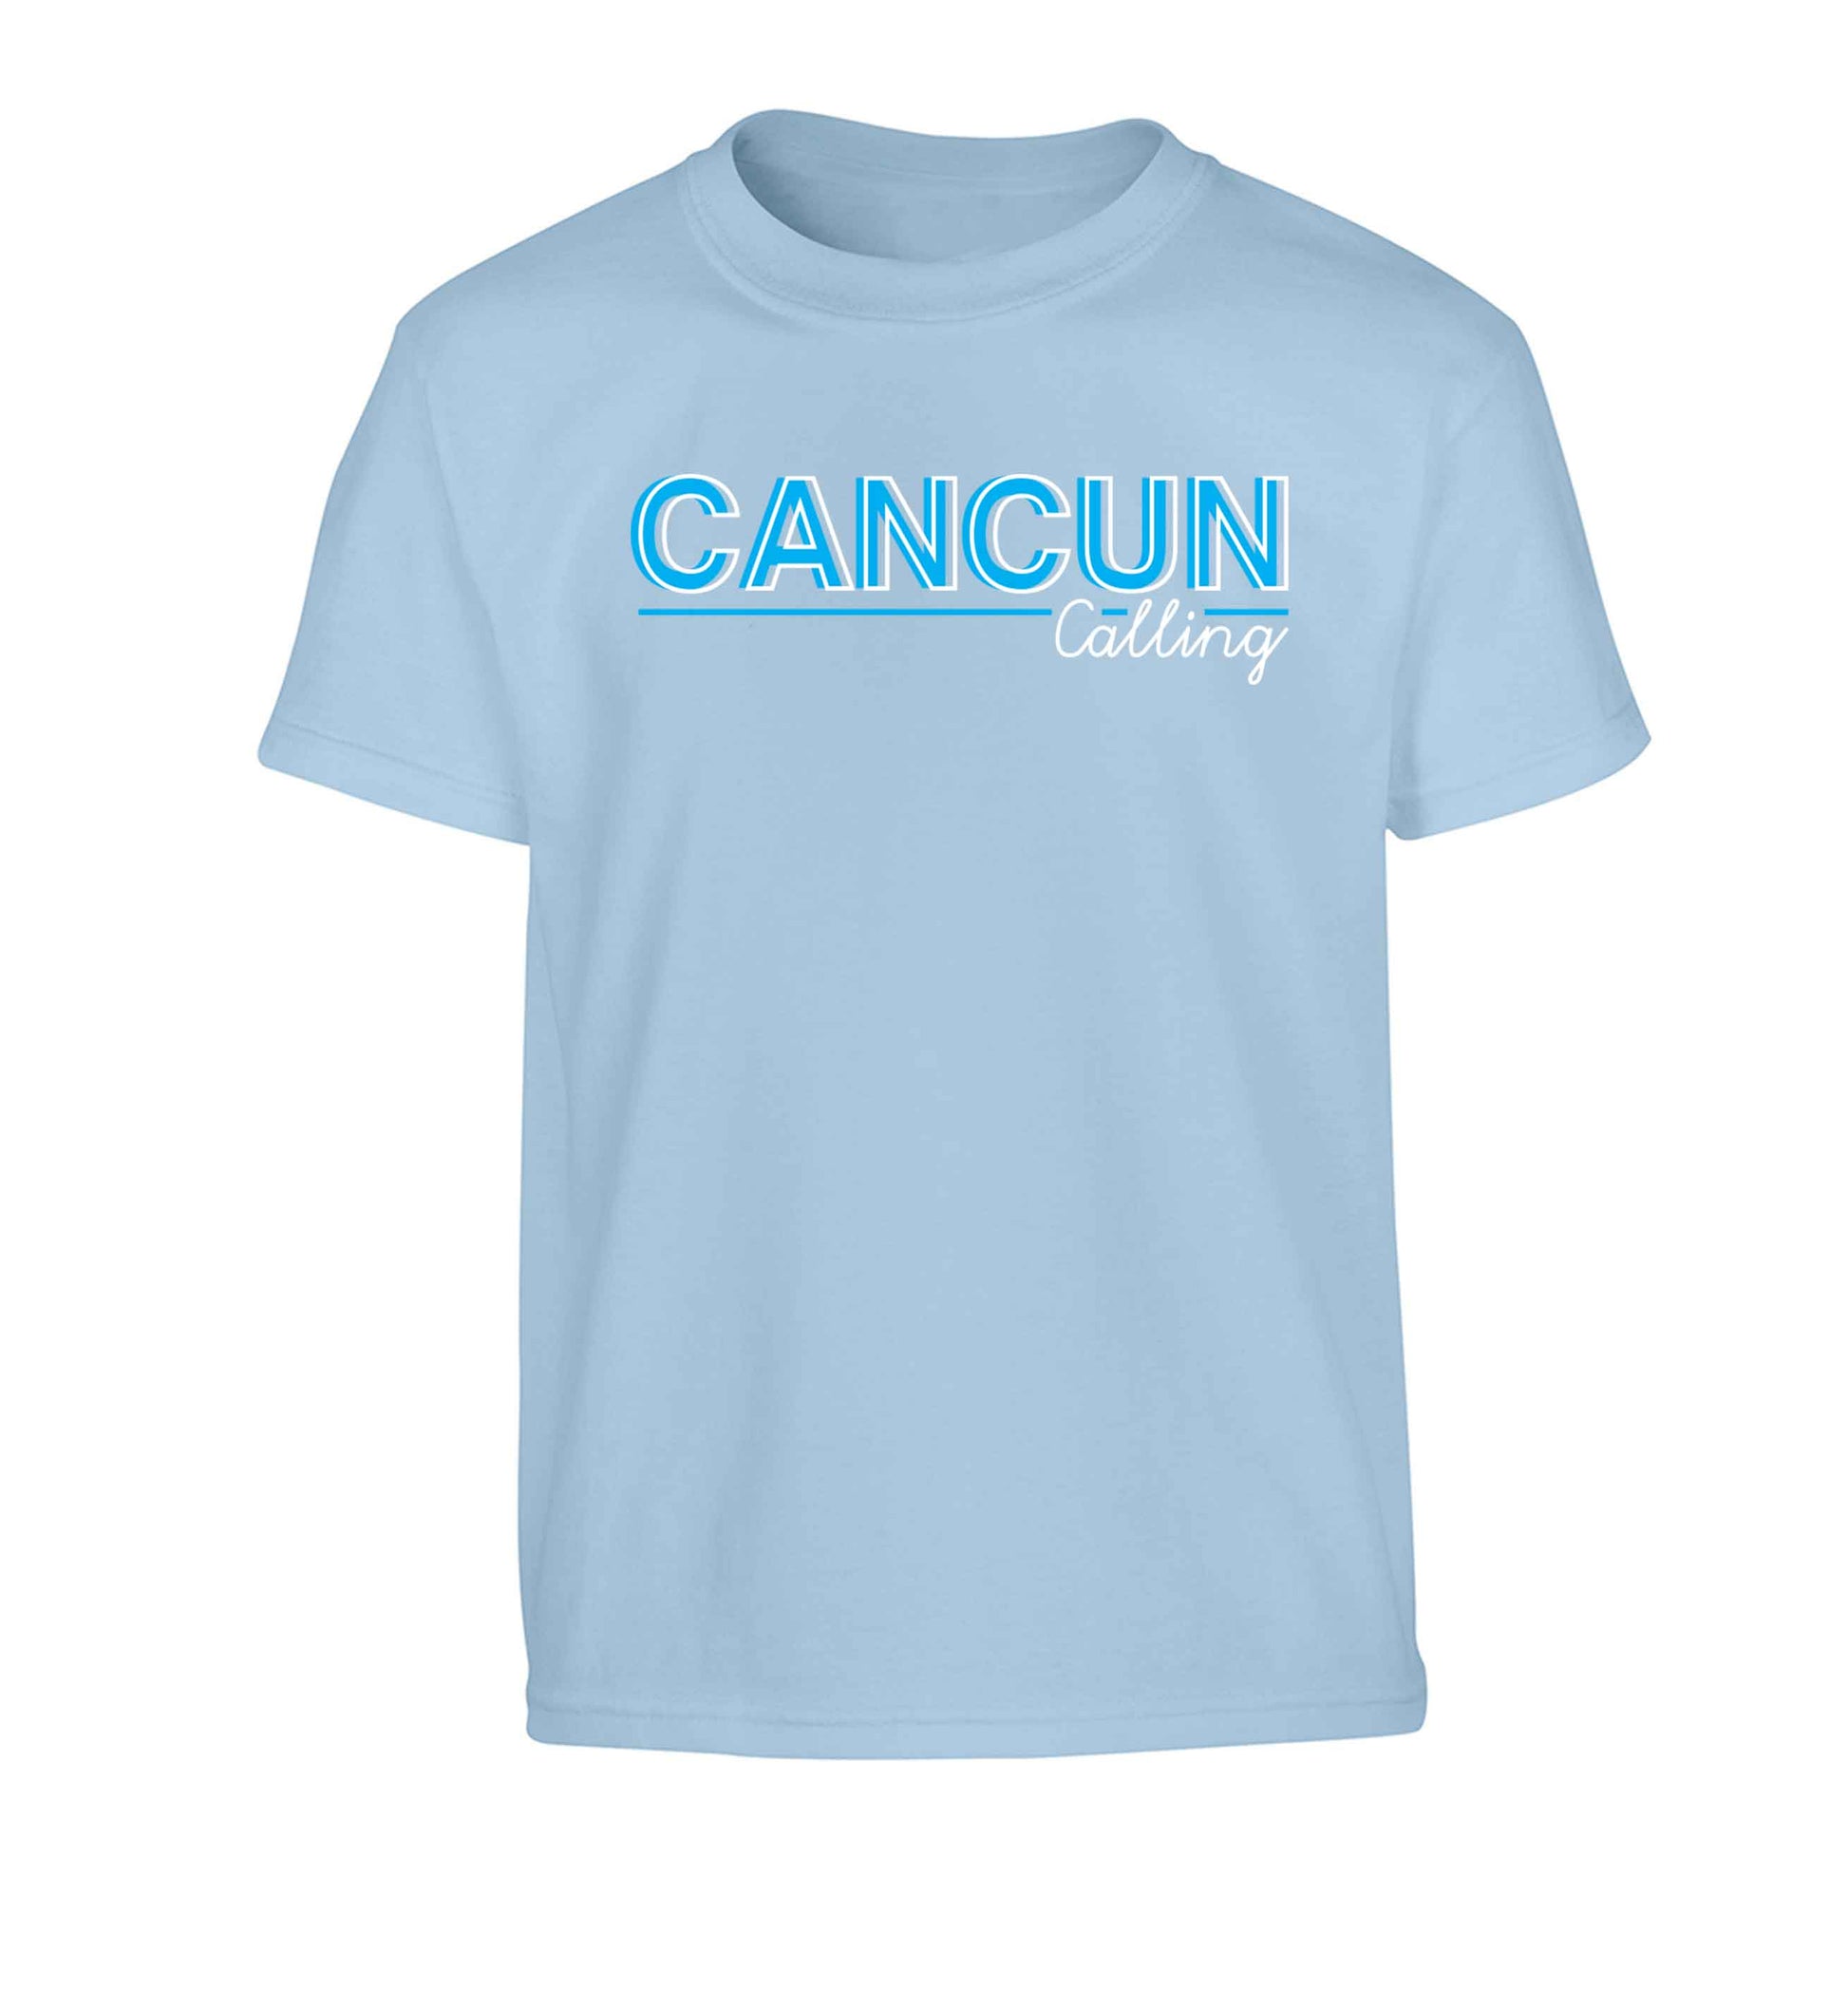 Cancun calling Children's light blue Tshirt 12-13 Years